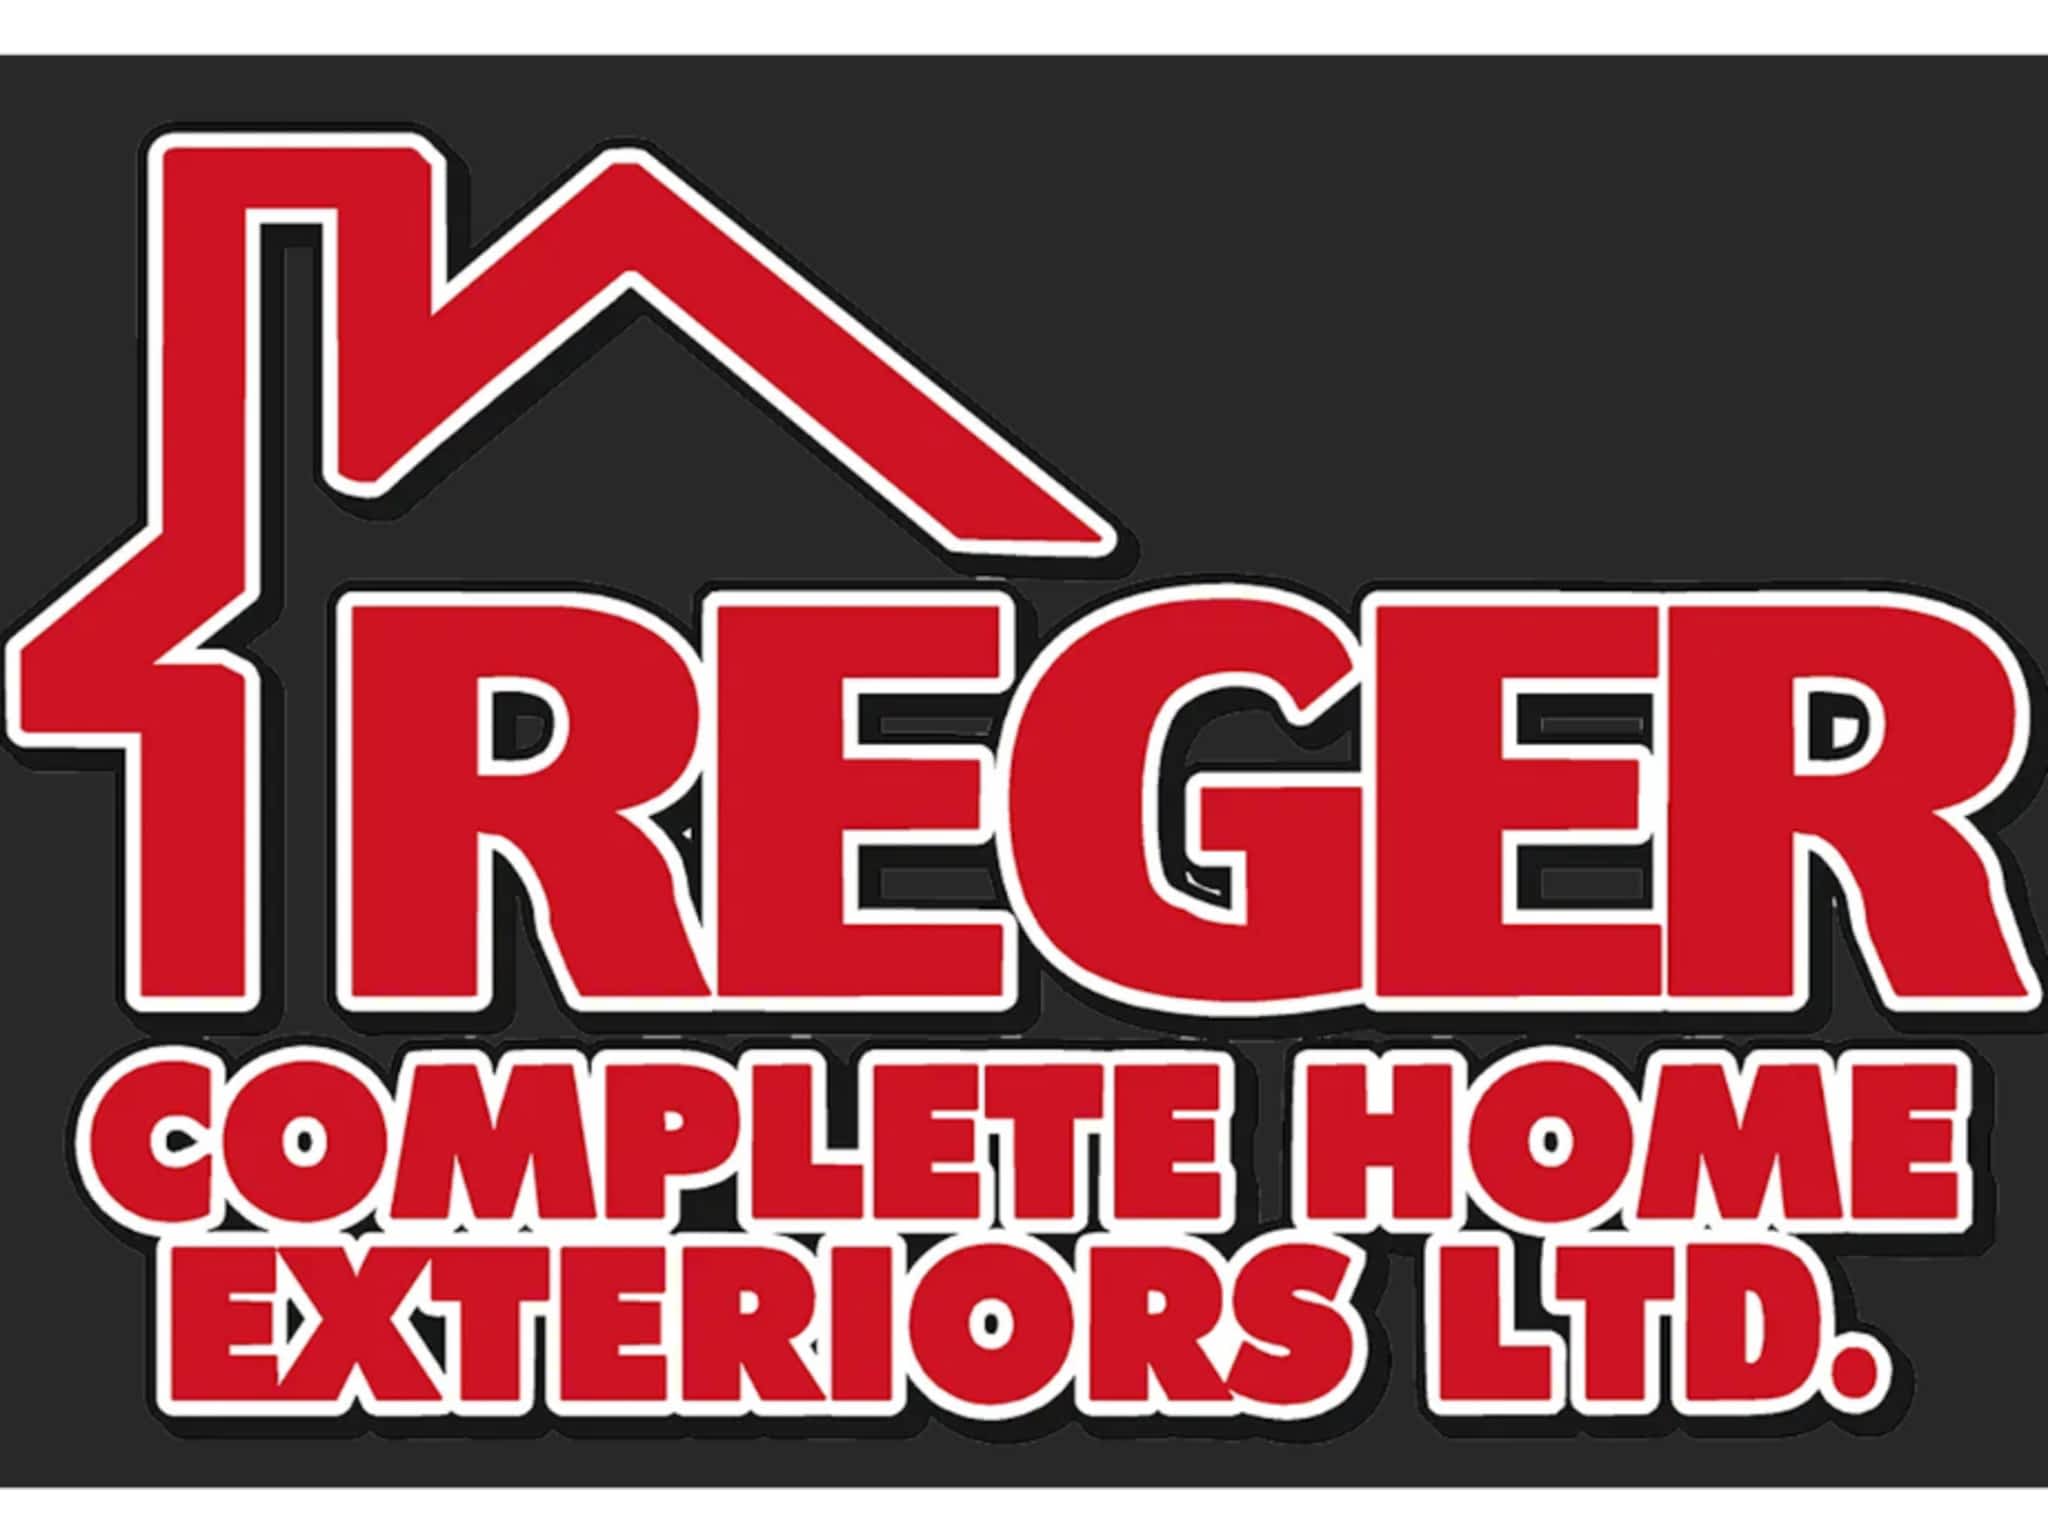 photo Reger Complete Home Exteriors Ltd.